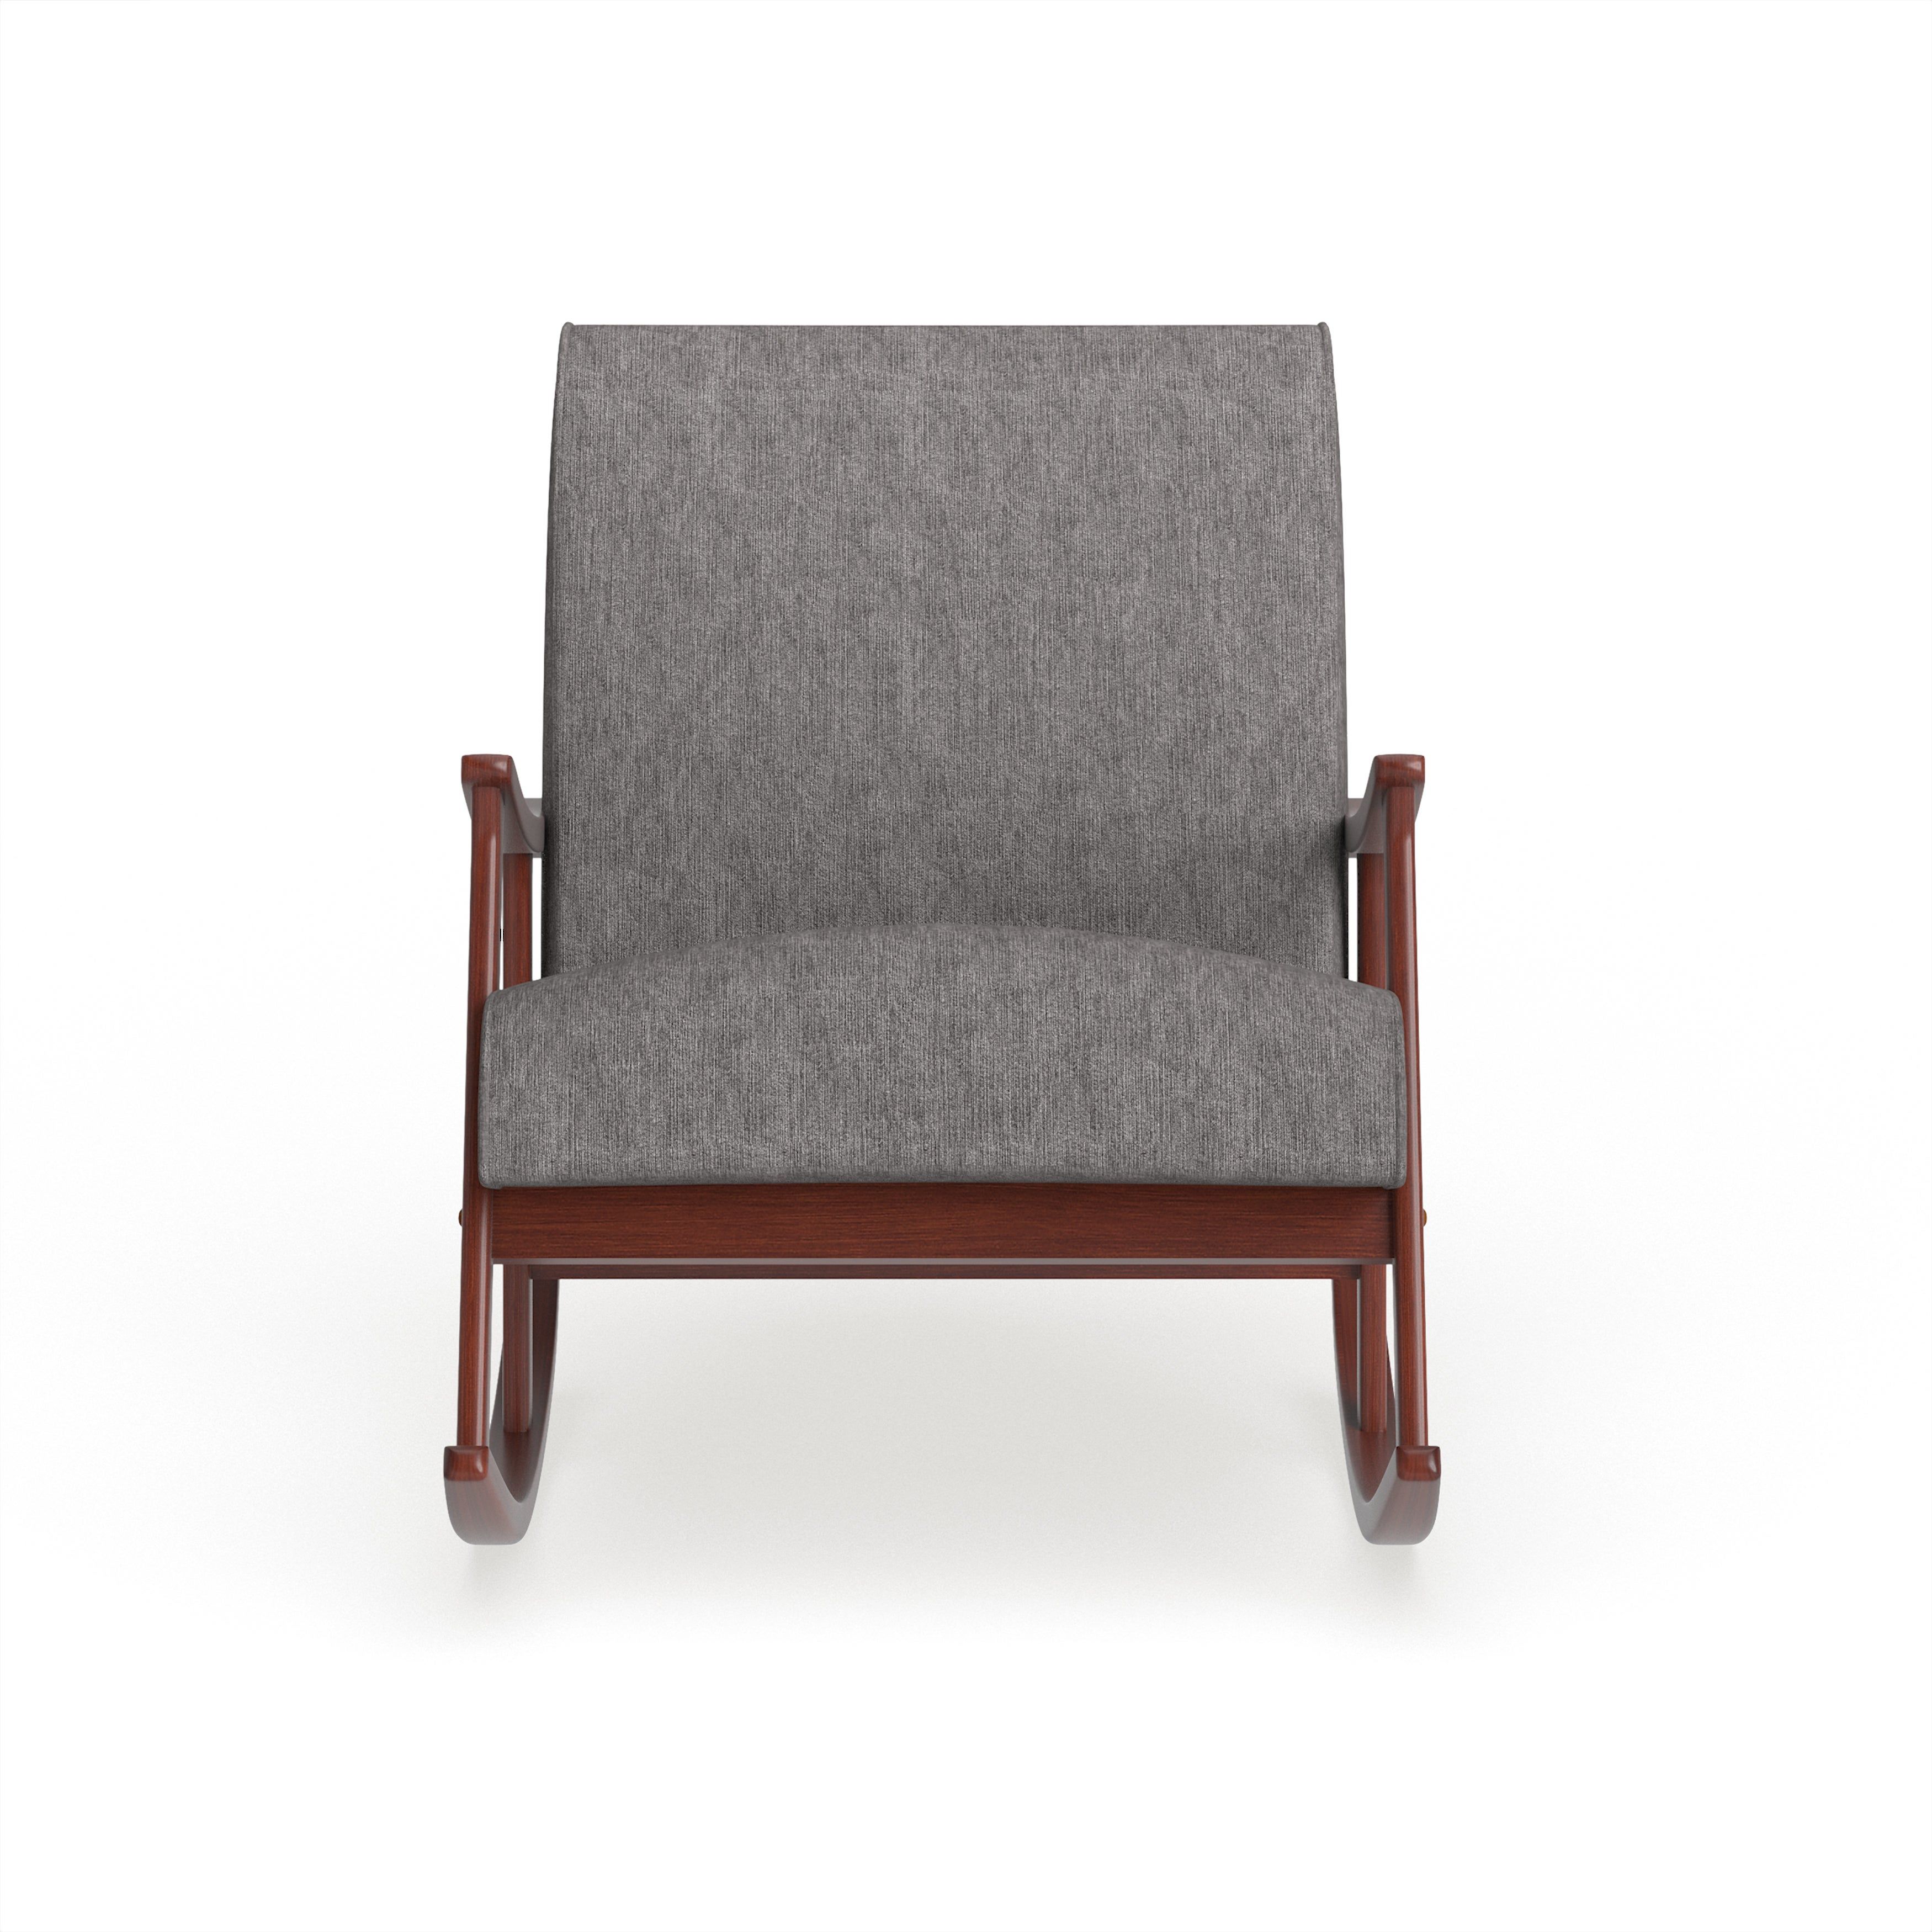 Carson Carrington Granite Grey Fabric Mid Century Wooden Rocking Chair Throughout Granite Grey Fabric Mid Century Wooden Rocking Chairs (View 8 of 20)